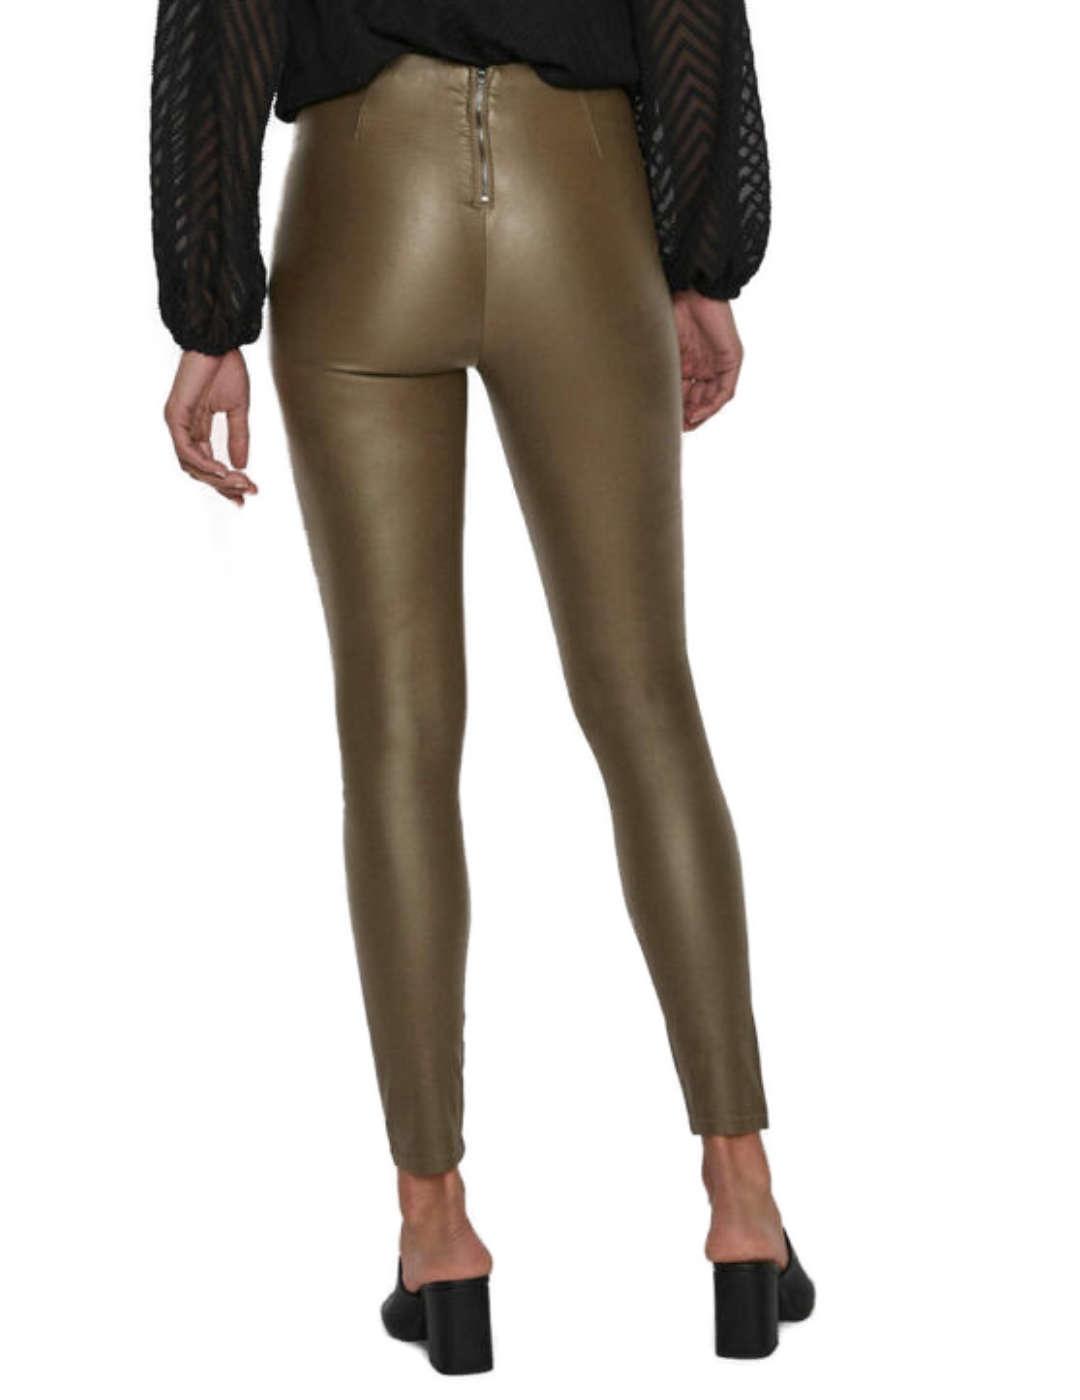 Pantalón sastre cuadros marrón - Mujer - OI2022